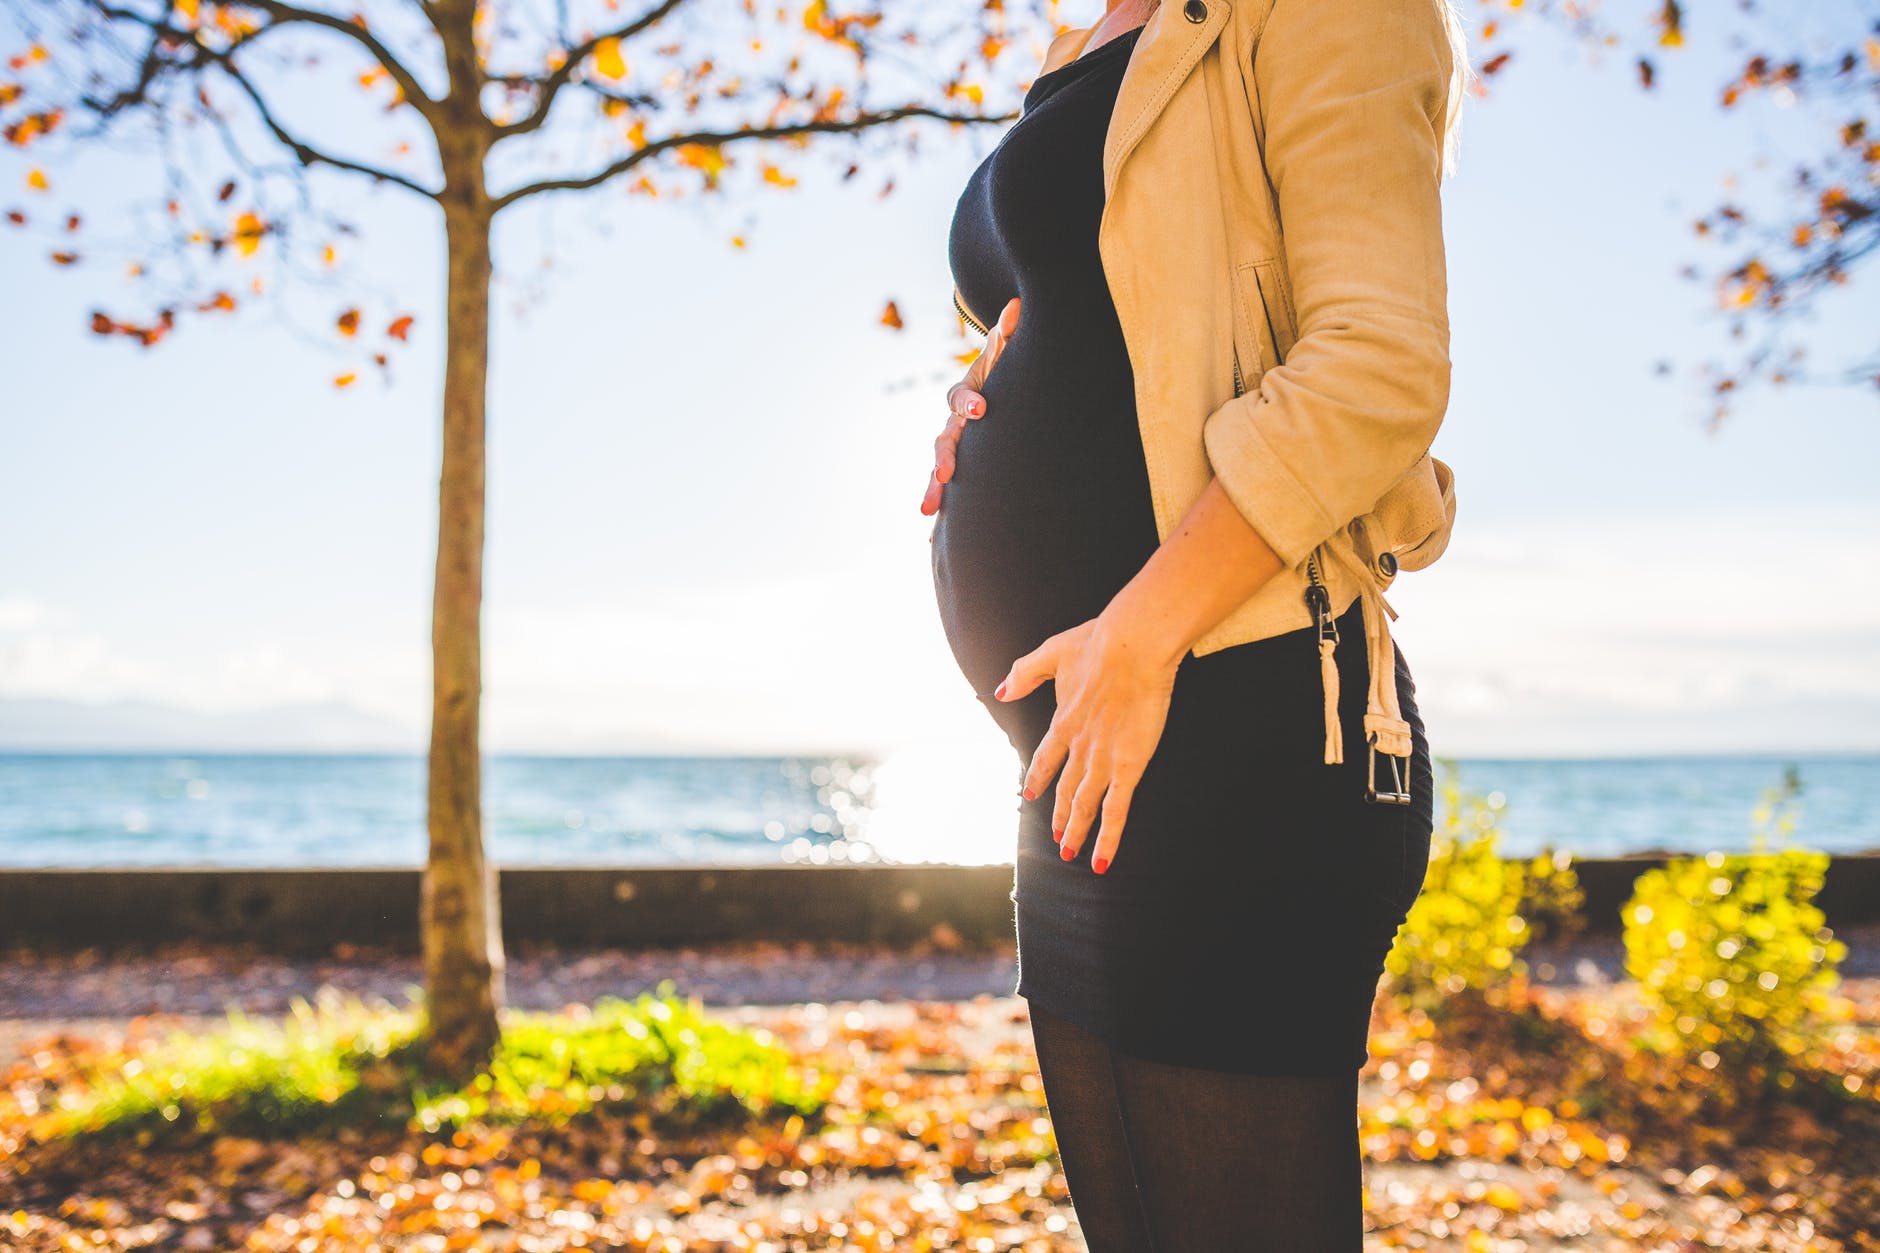 Cruralgi og graviditet: Hvordan håndtere anfall? (Øvelser)